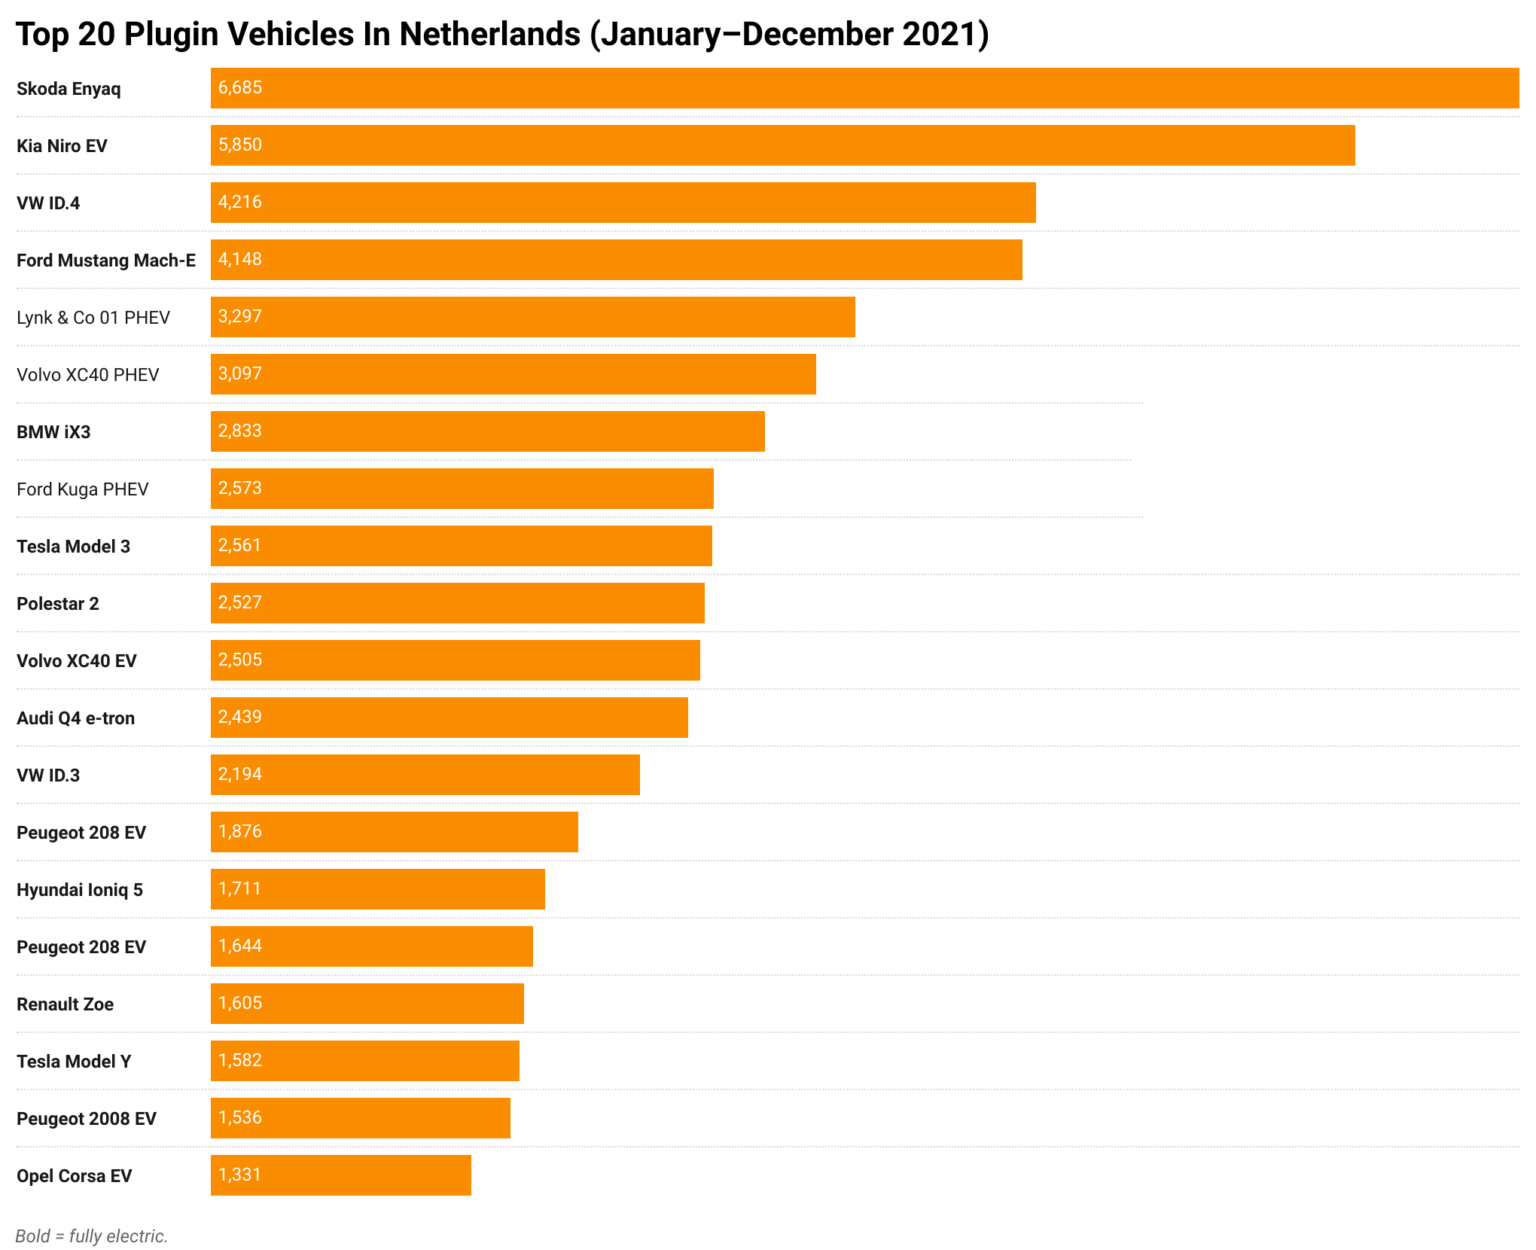 CleanTechnica 20 top plugin vehicles in Netherlands January-December 2021